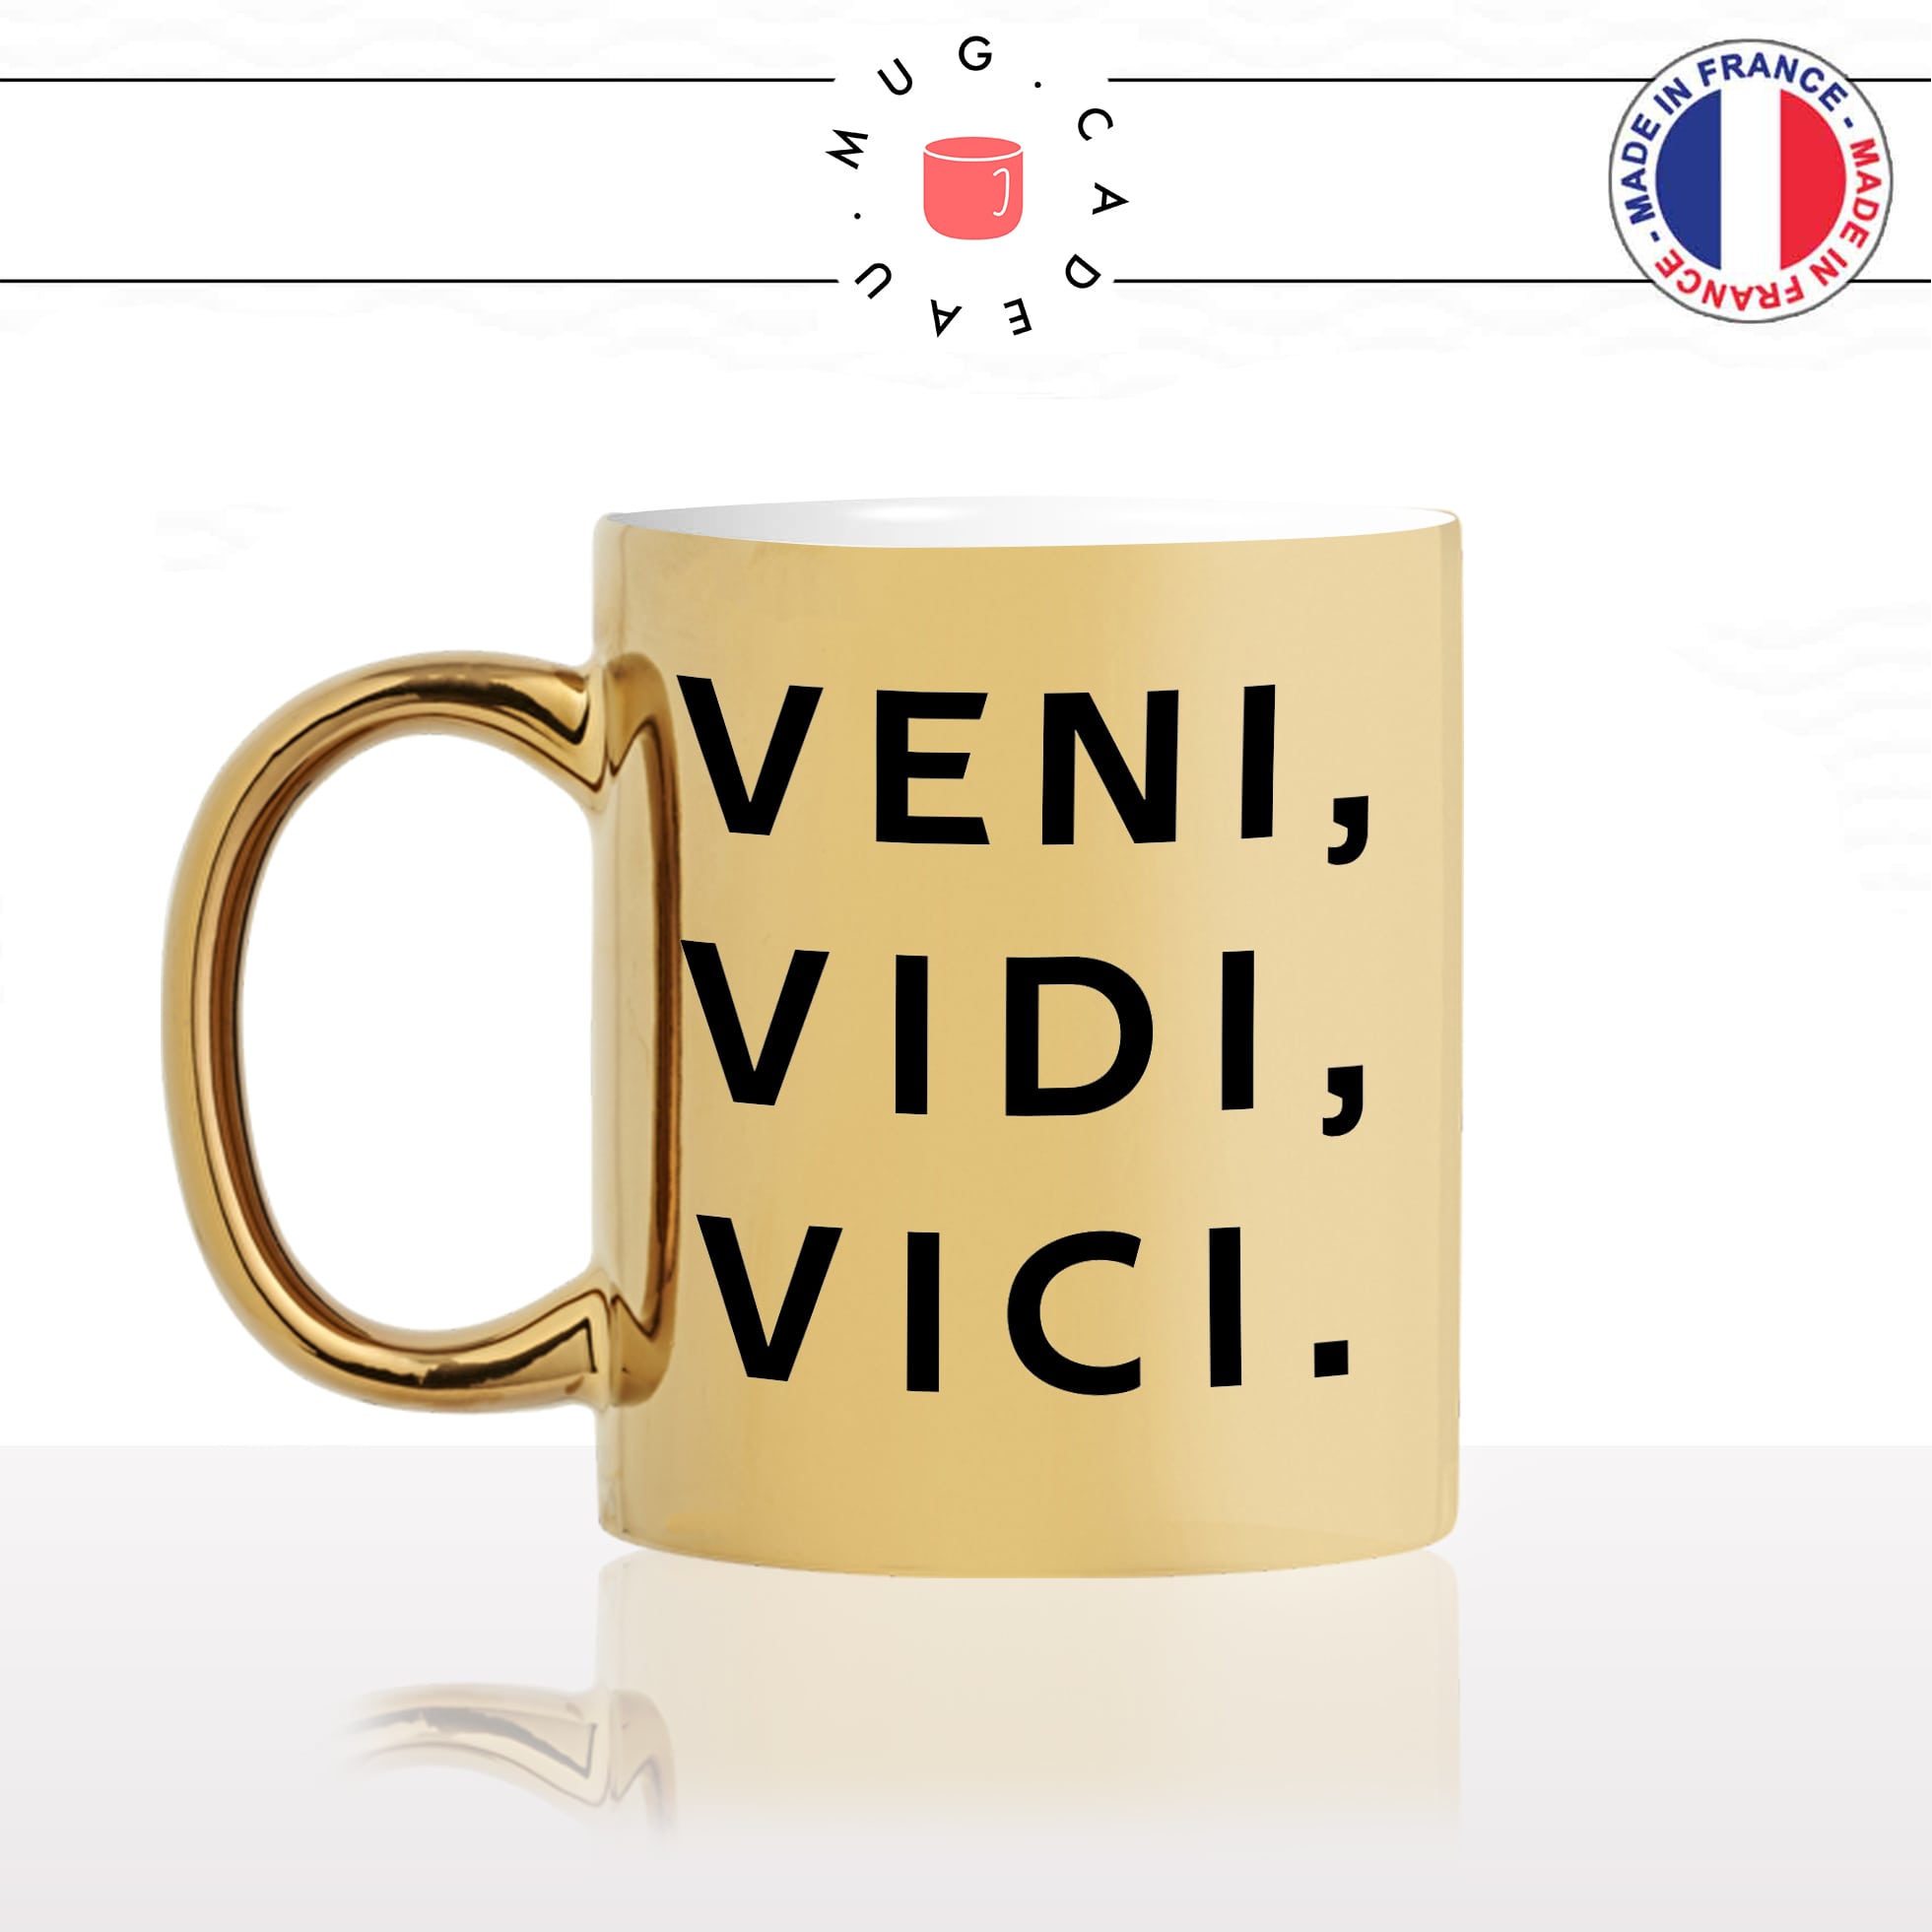 mug-tasse-or-doré-gold-veni-vidi-vici-napoleon-latin-citataion-guerre-venu-vu-vaincu-humour-fun-idée-cadeau-originale-cool-min